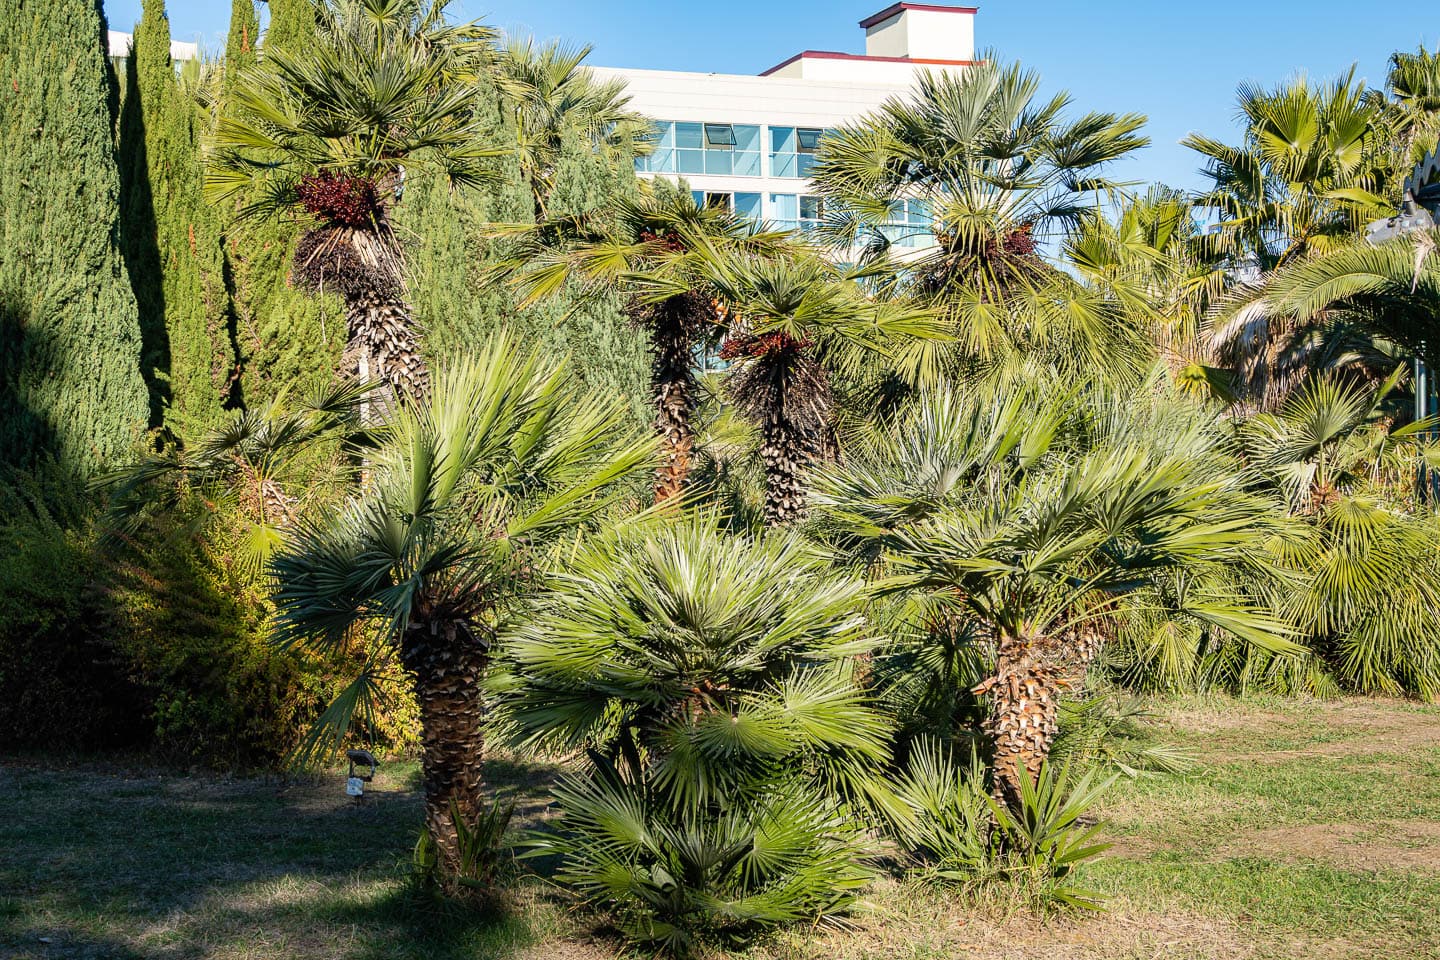 European fan palm grown as a privacy hedge